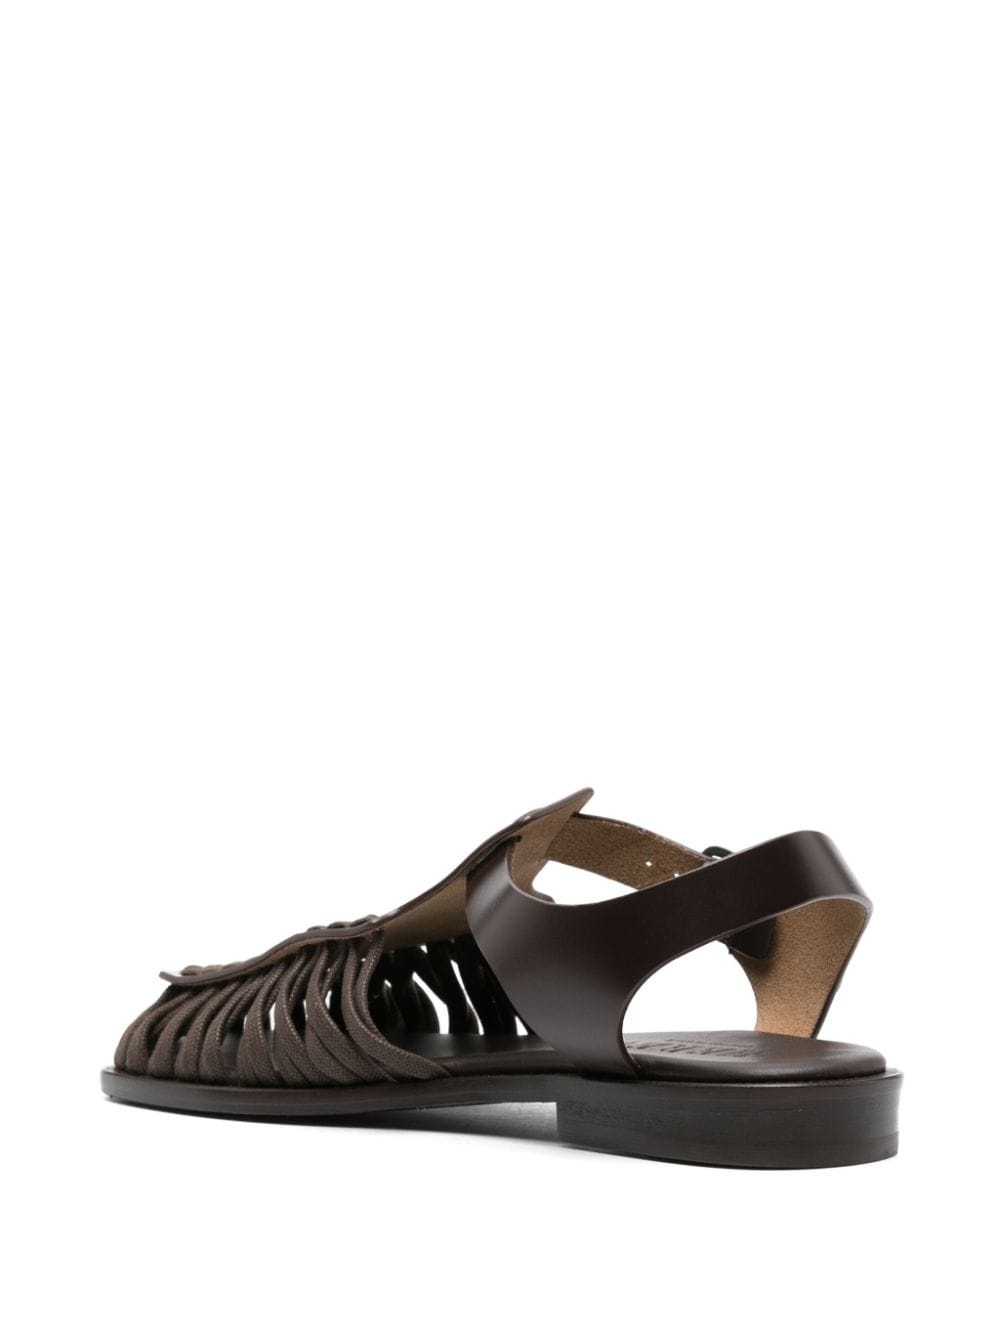 Alaro leather sandals - 3